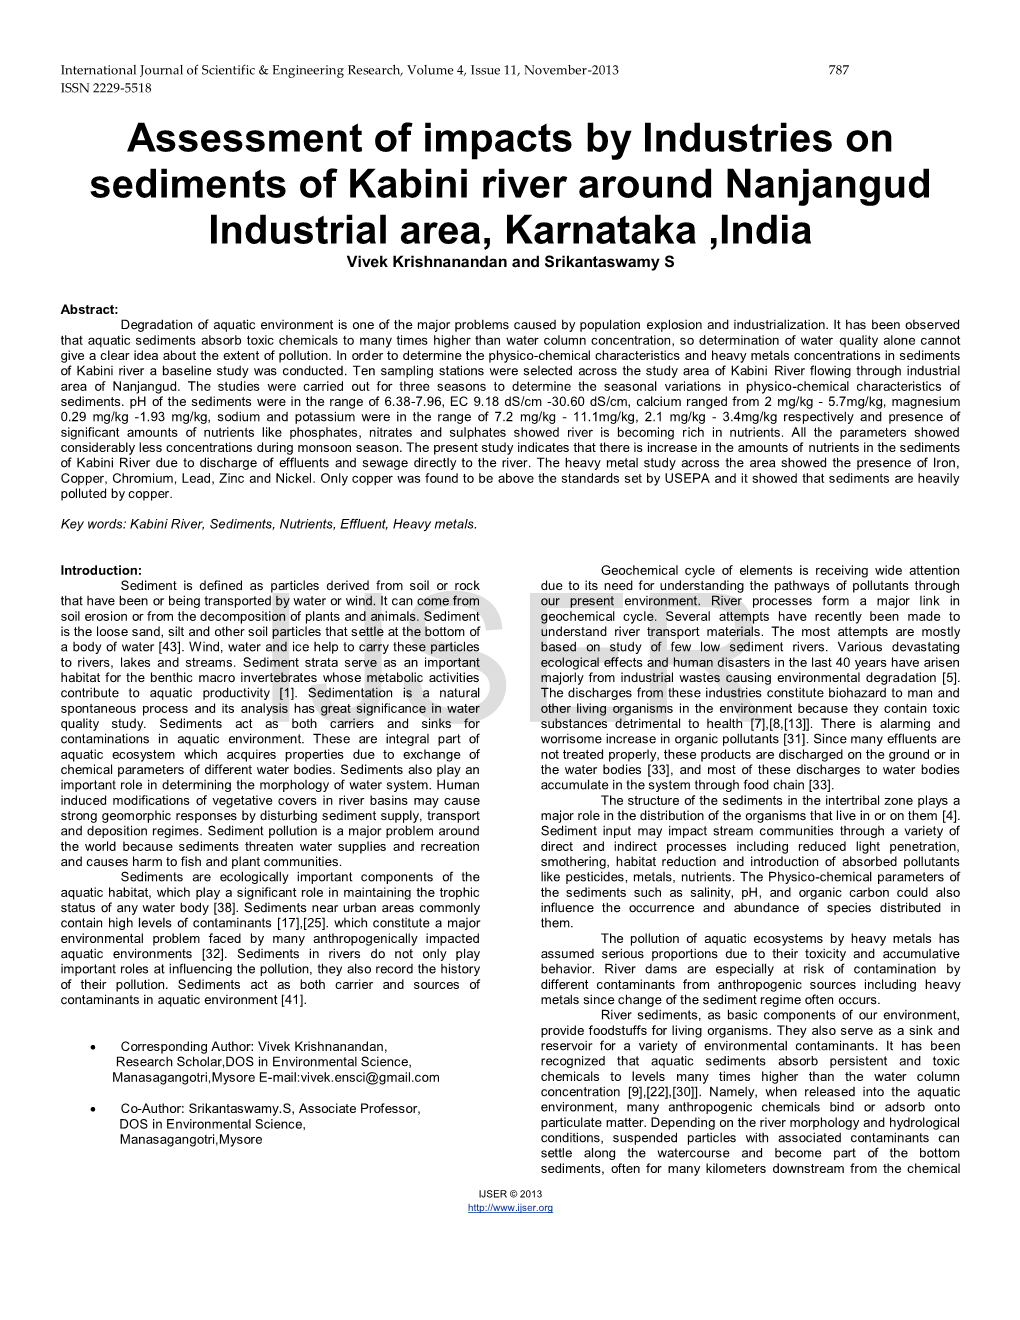 Assessment of Impacts by Industries on Sediments of Kabini River Around Nanjangud Industrial Area, Karnataka ,India Vivek Krishnanandan and Srikantaswamy S